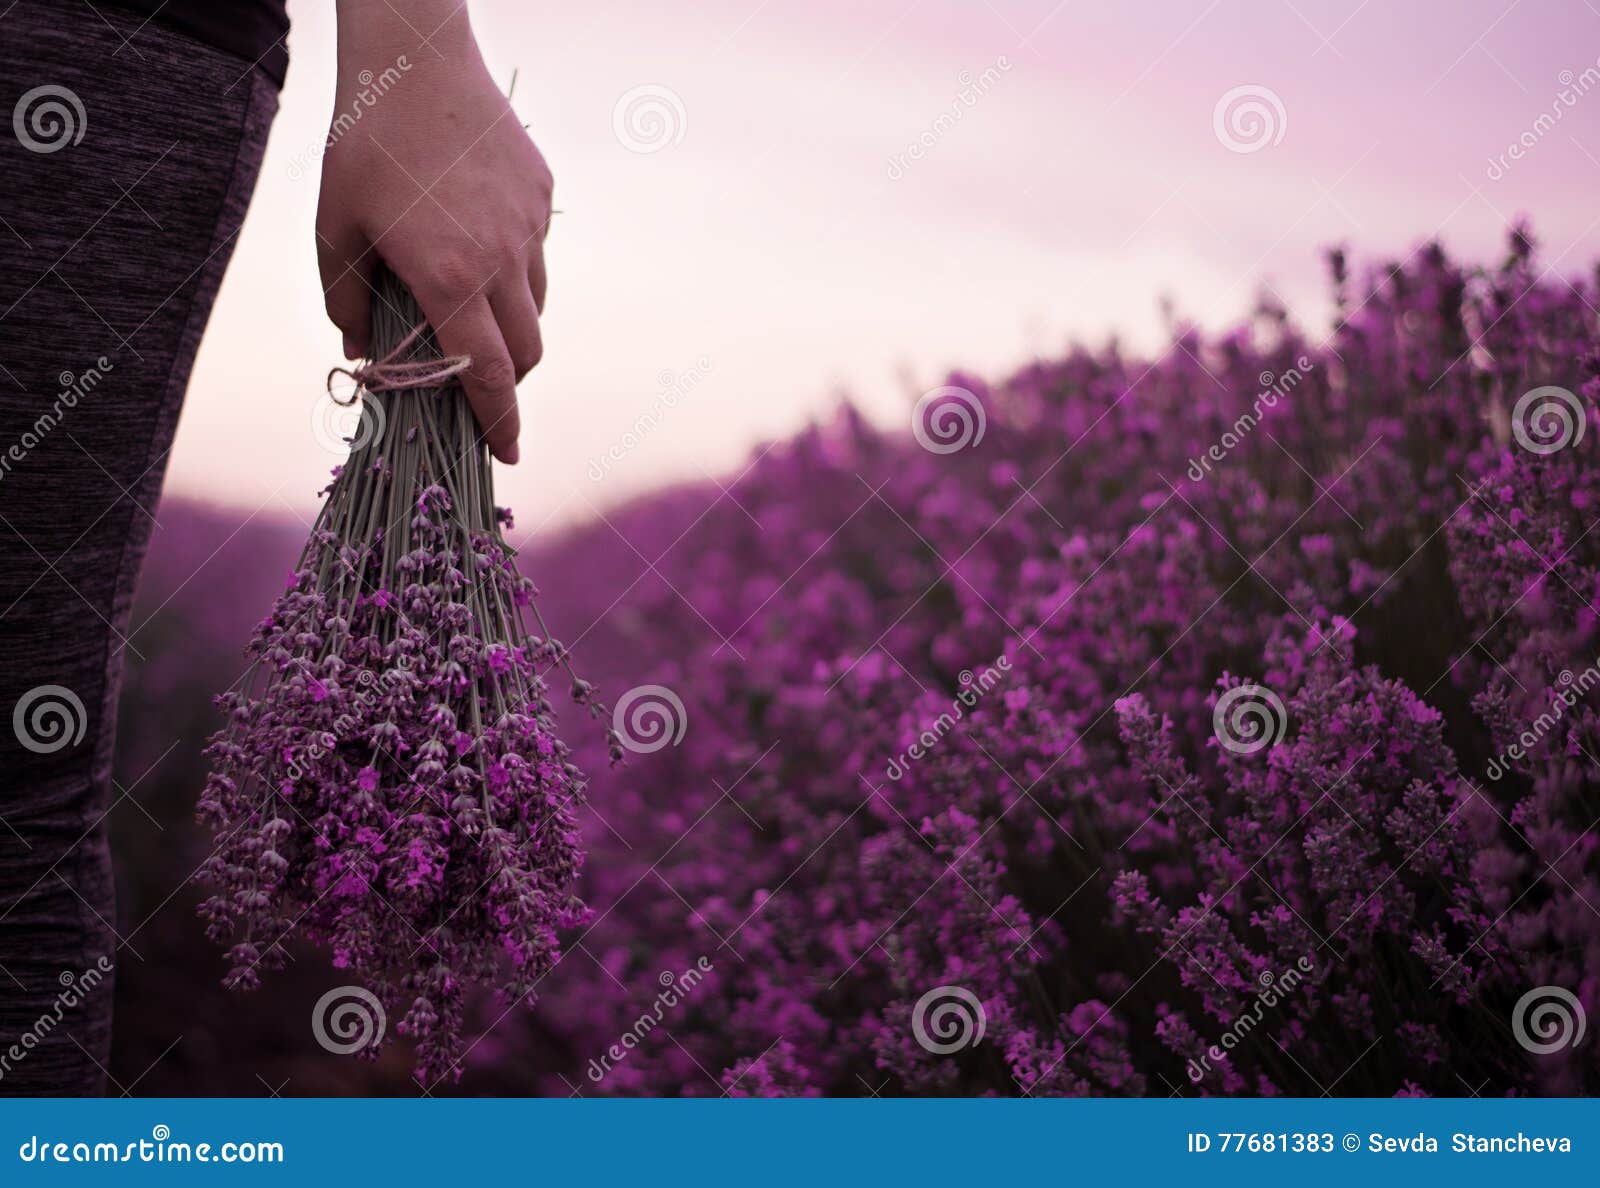 gathering a bouquet of lavender. girl hand holding a bouquet of fresh lavender in lavender field. sun, sun haze, glare.